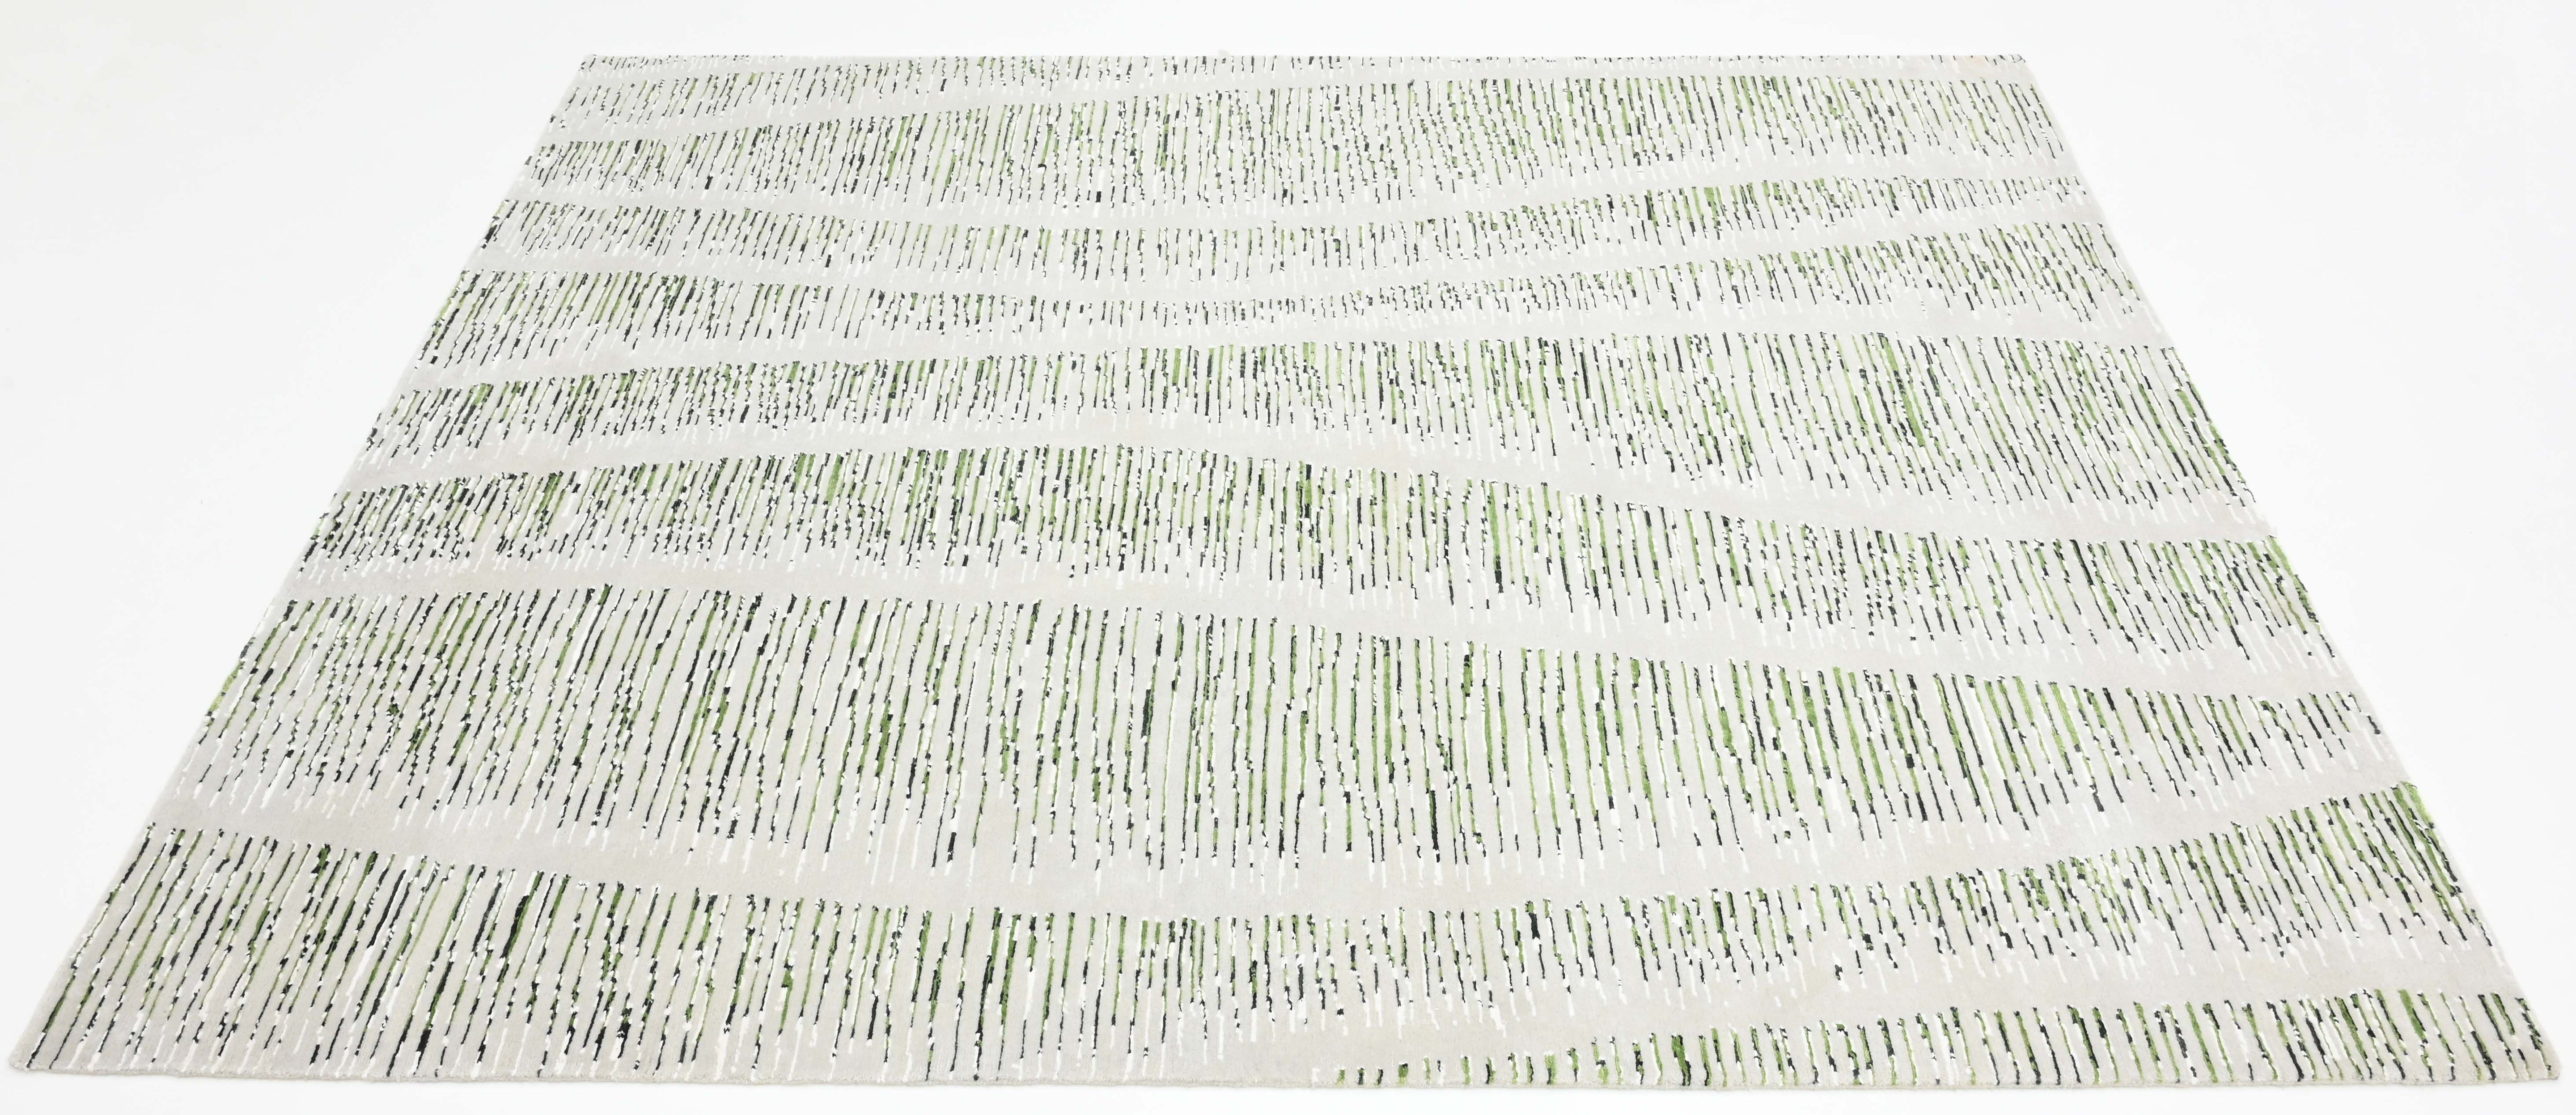 Modern green luxury abstract rug